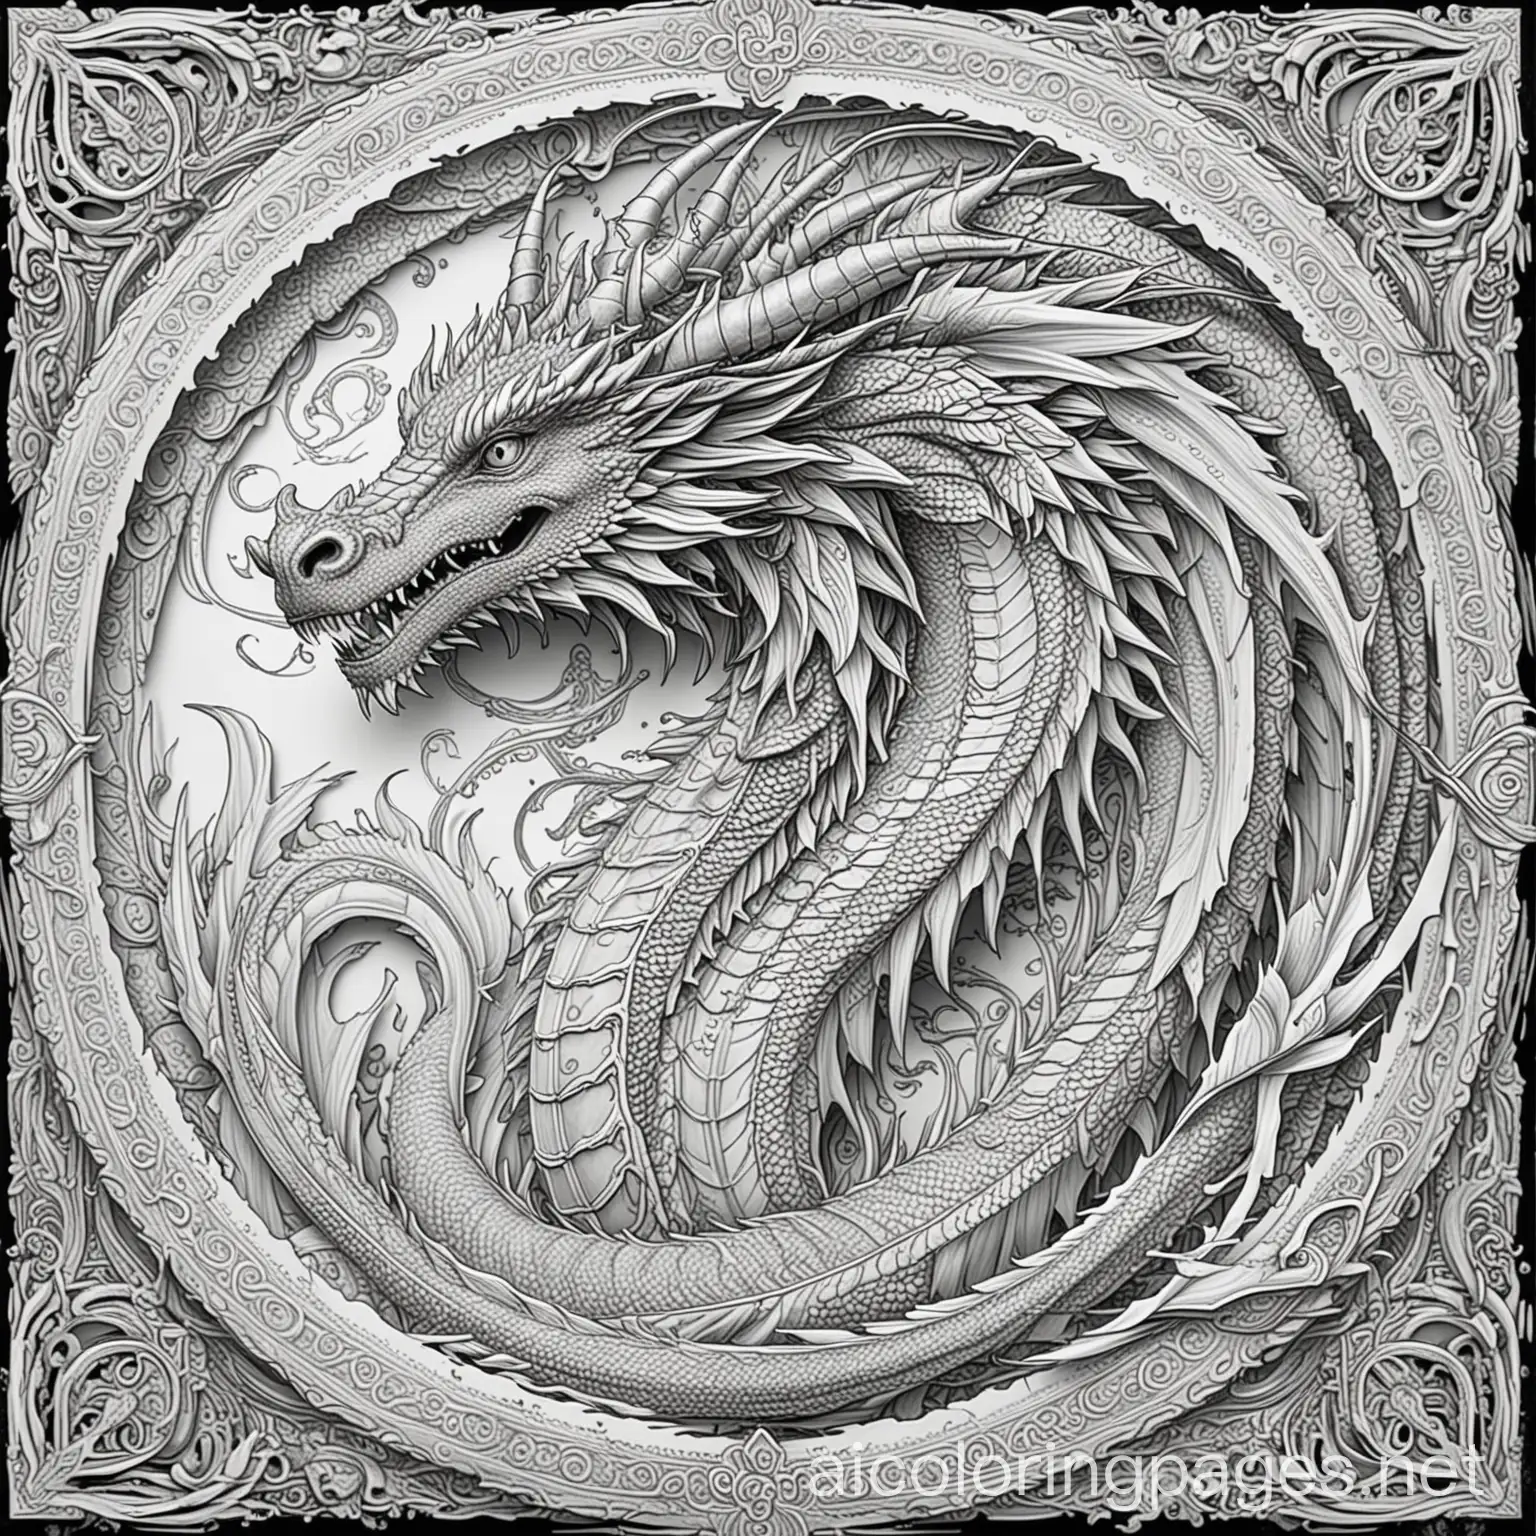 Elaborate-and-Intricate-Regal-Druk-Dragon-for-Adult-Coloring-Book